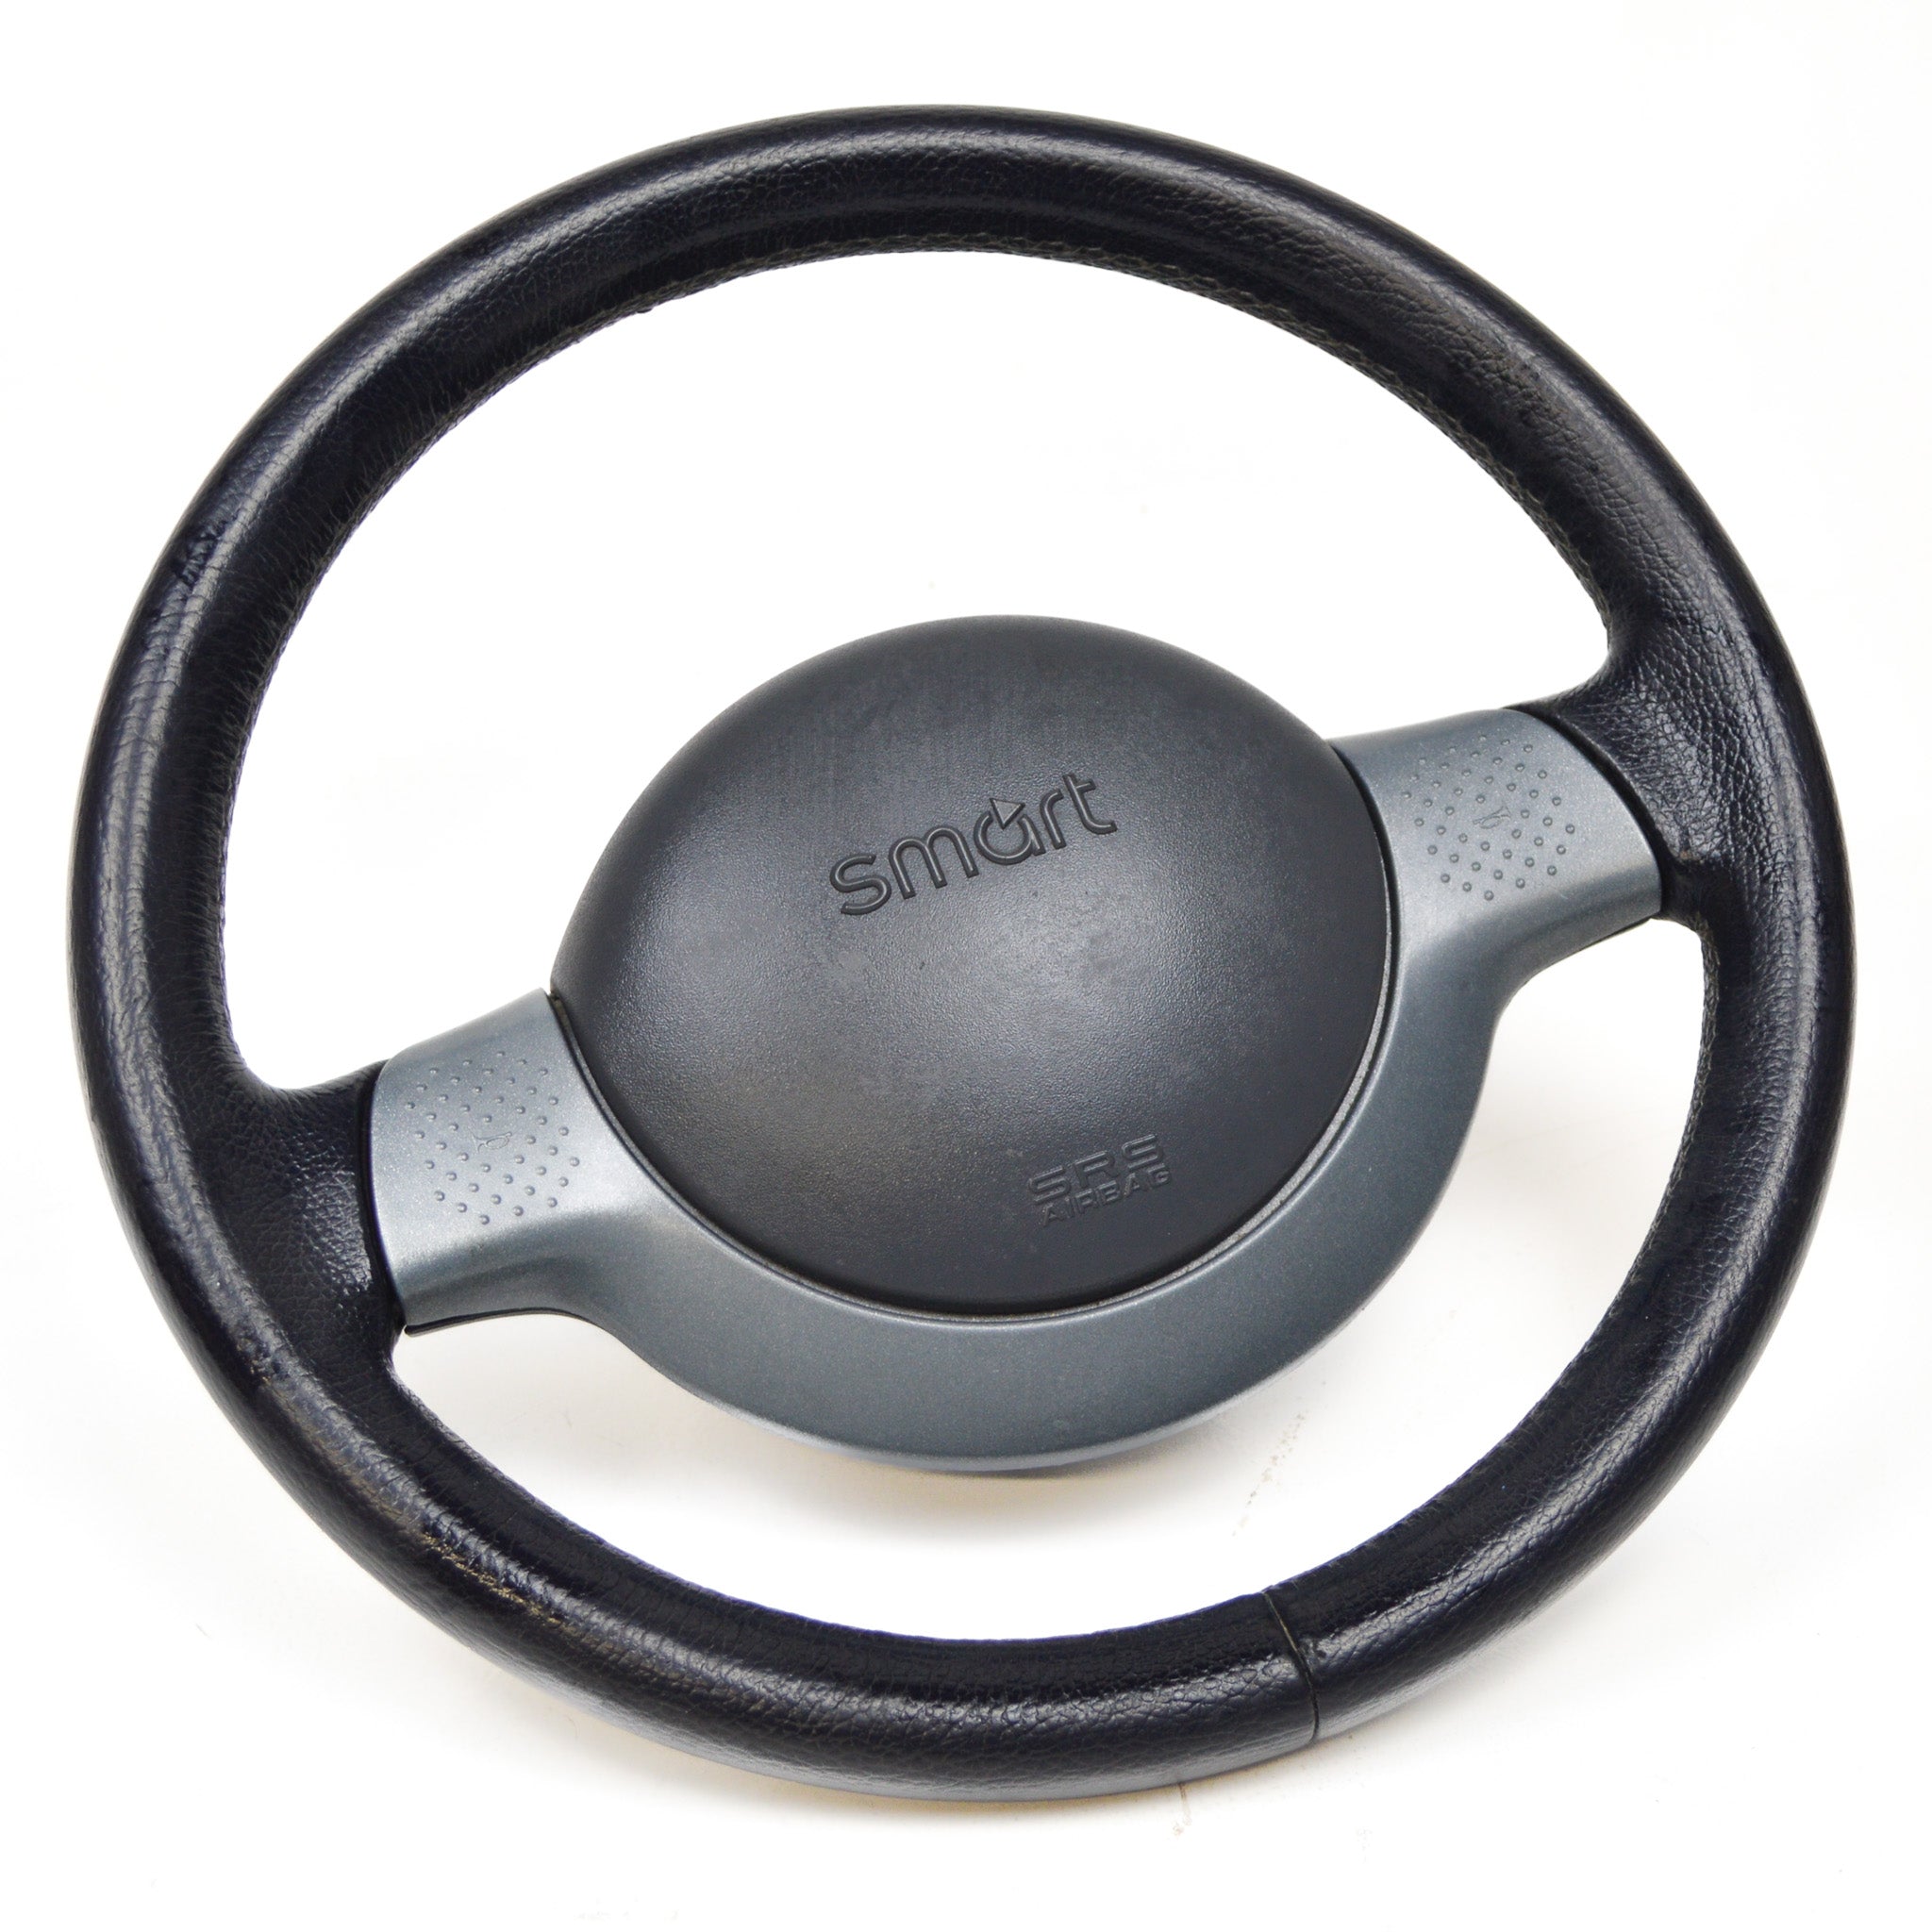 Smart fortwo 450 steering wheel with ESP, steering angle sensor, slip